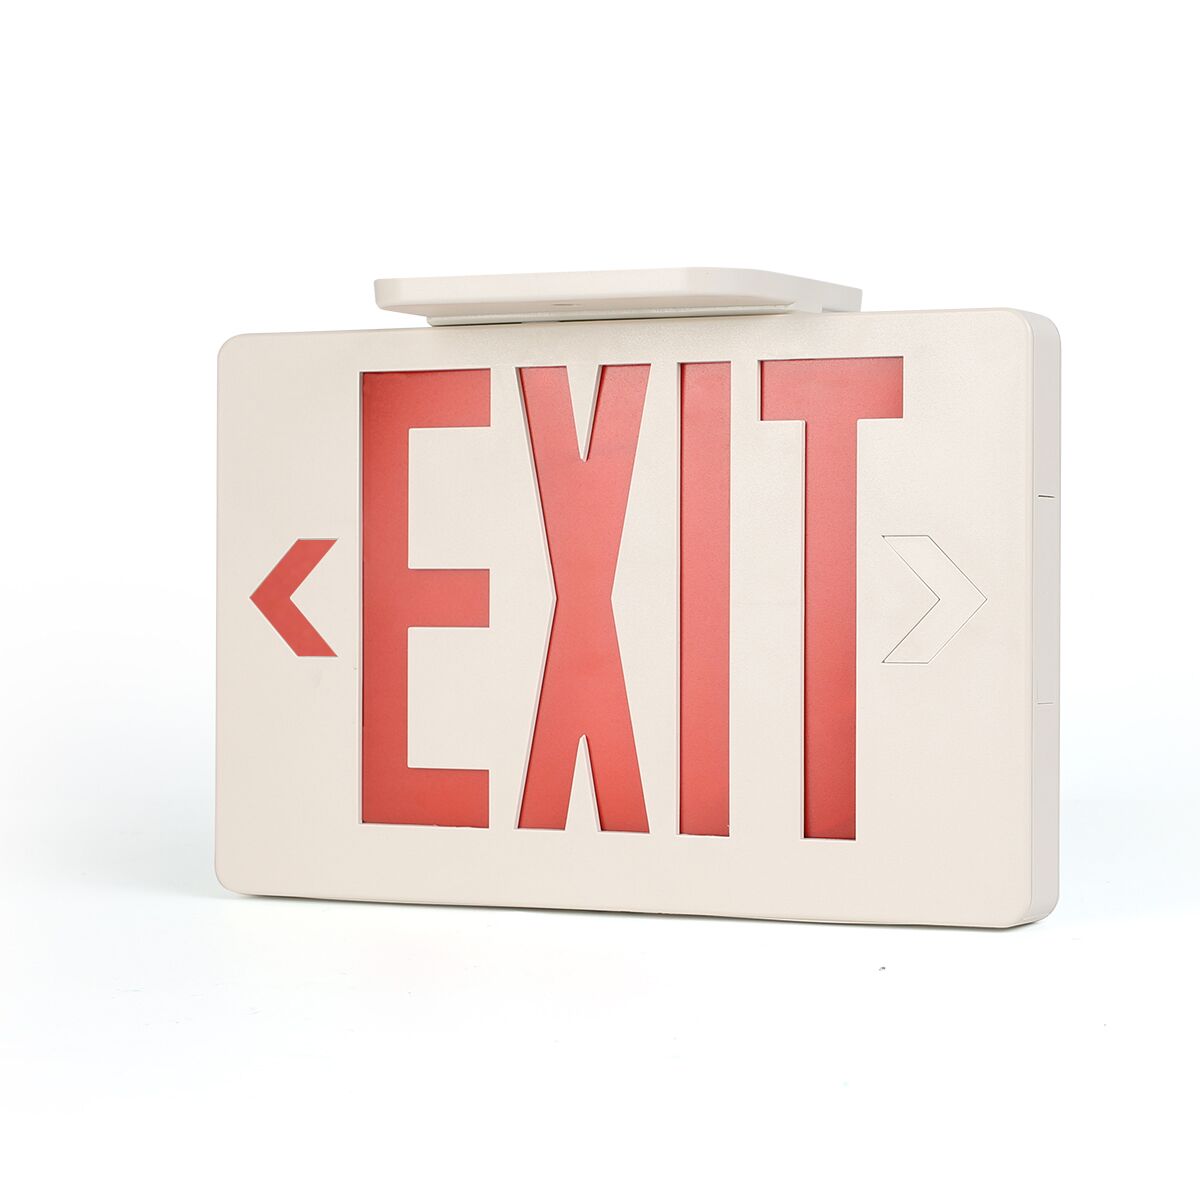 LED Exit Sign